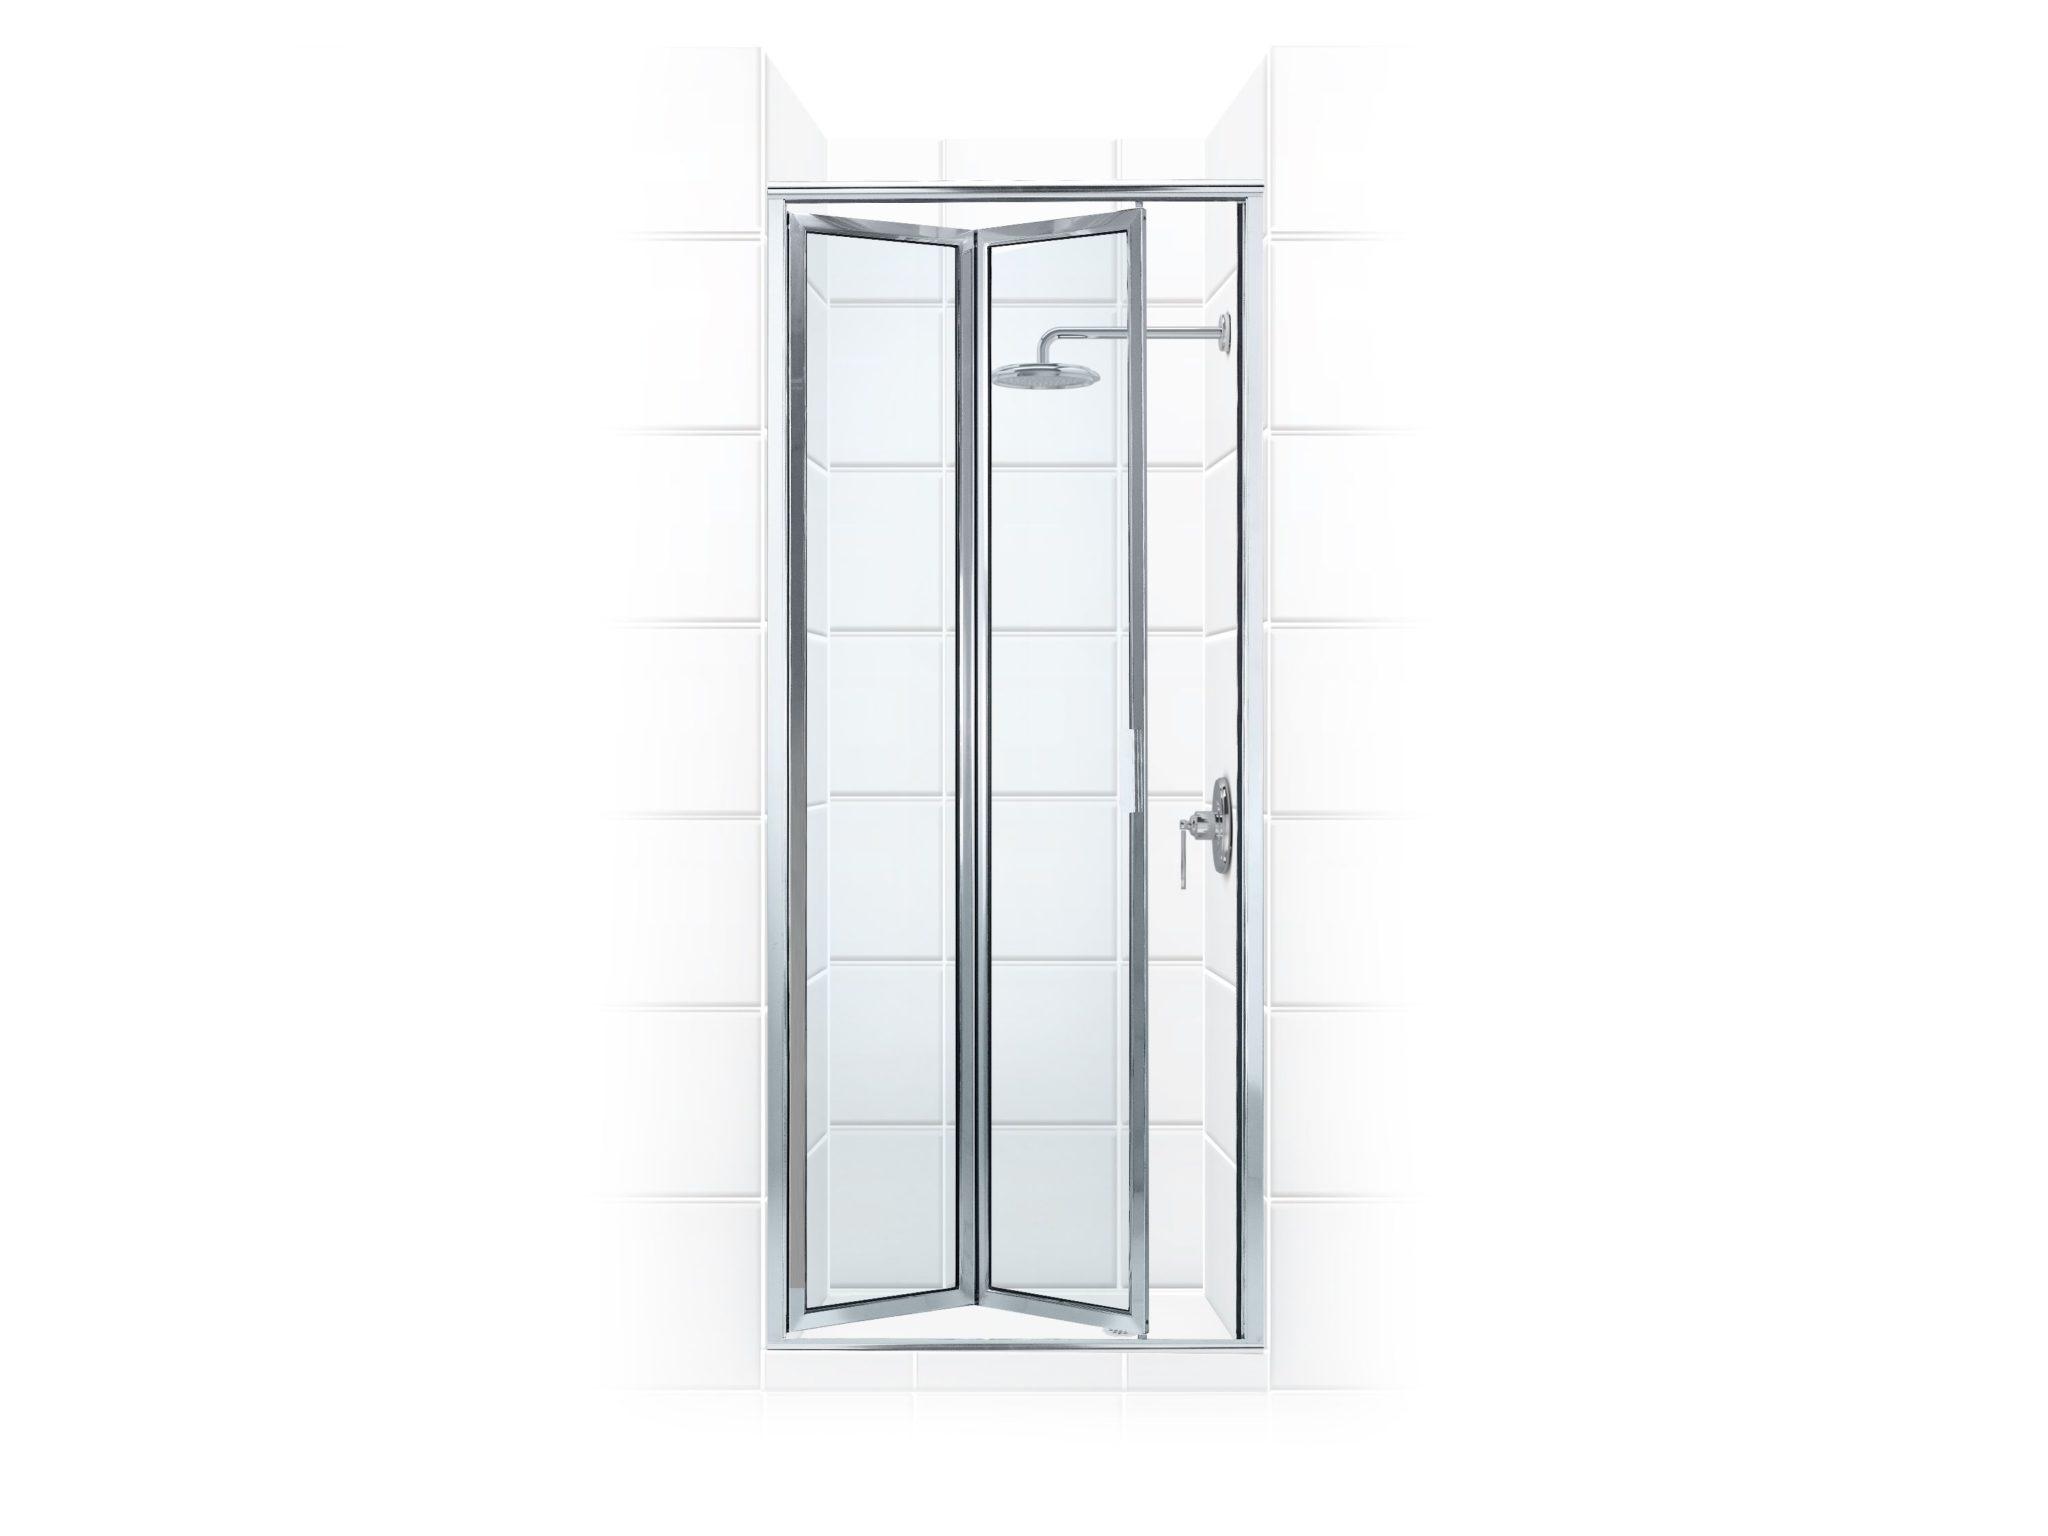 Paragon® Framed Coastal Shower Doors